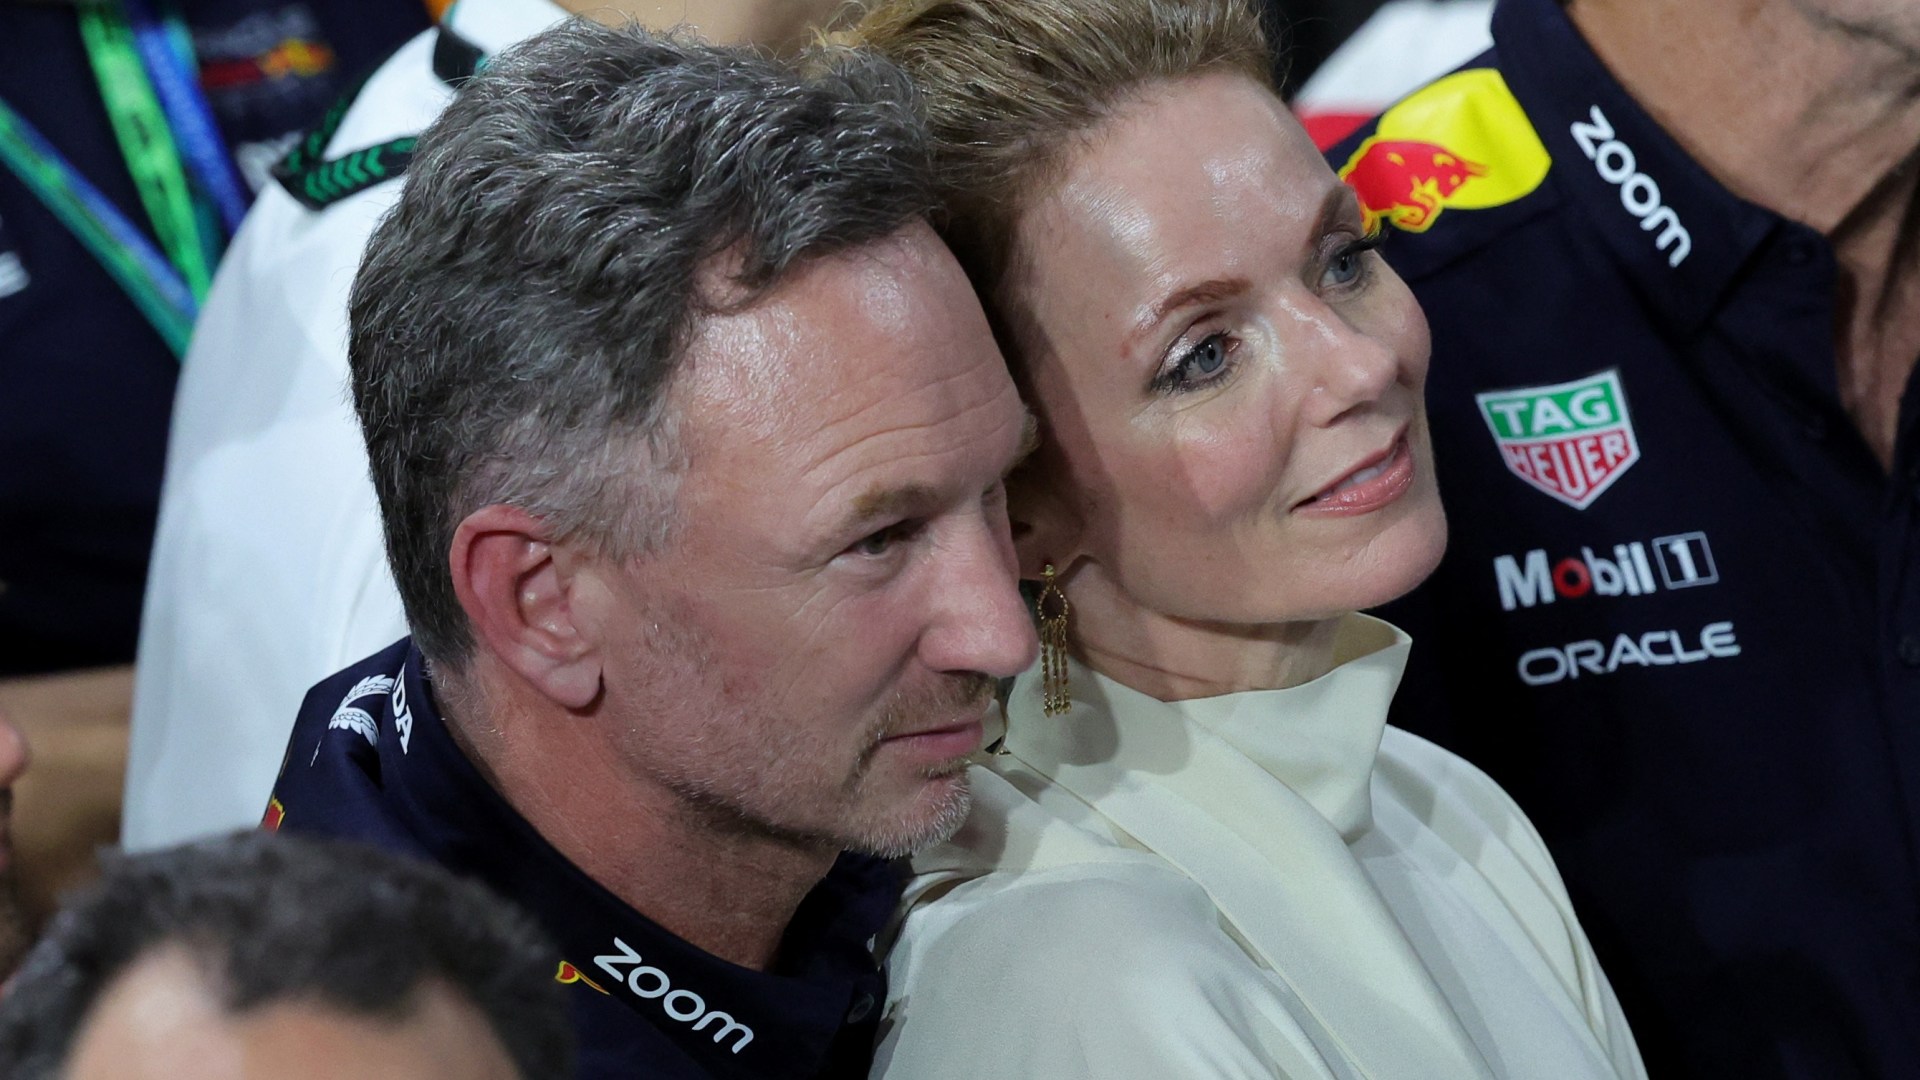 Christian Horner & Geri Halliwell cuddle up as they watch Red Bull podium celebrations at Saudi Arabian Grand Prix